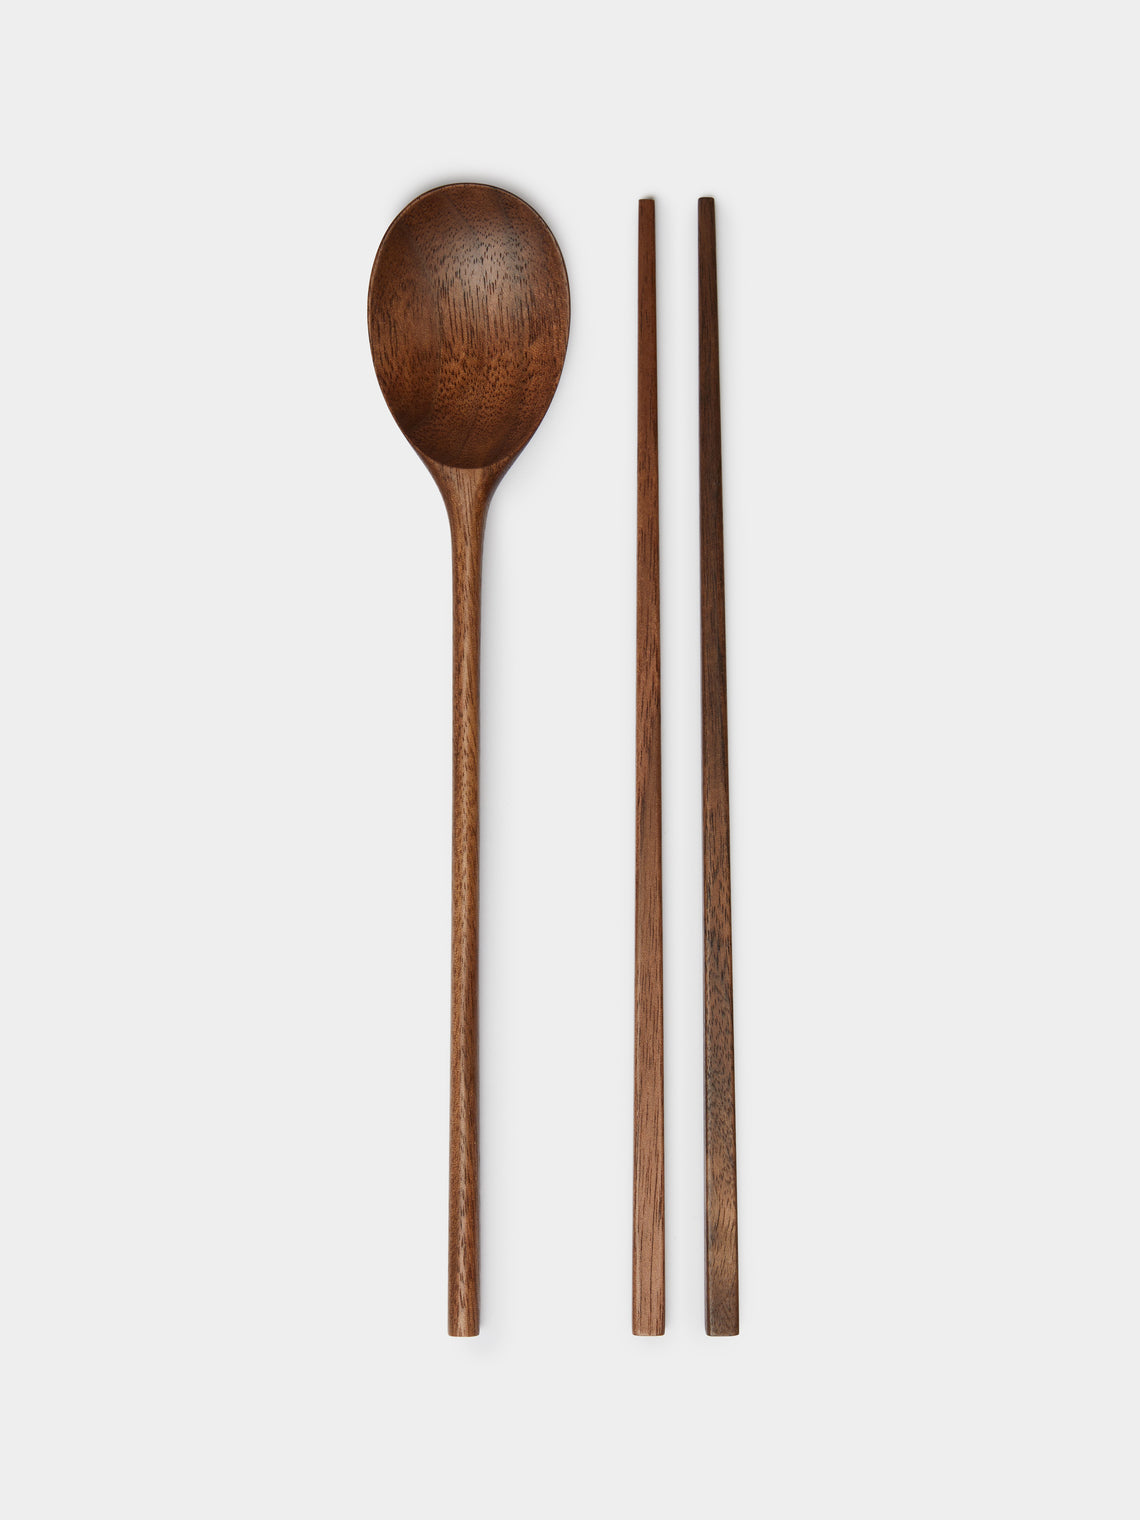 Hand-Carved Walnut Spoon and Chopsticks Set